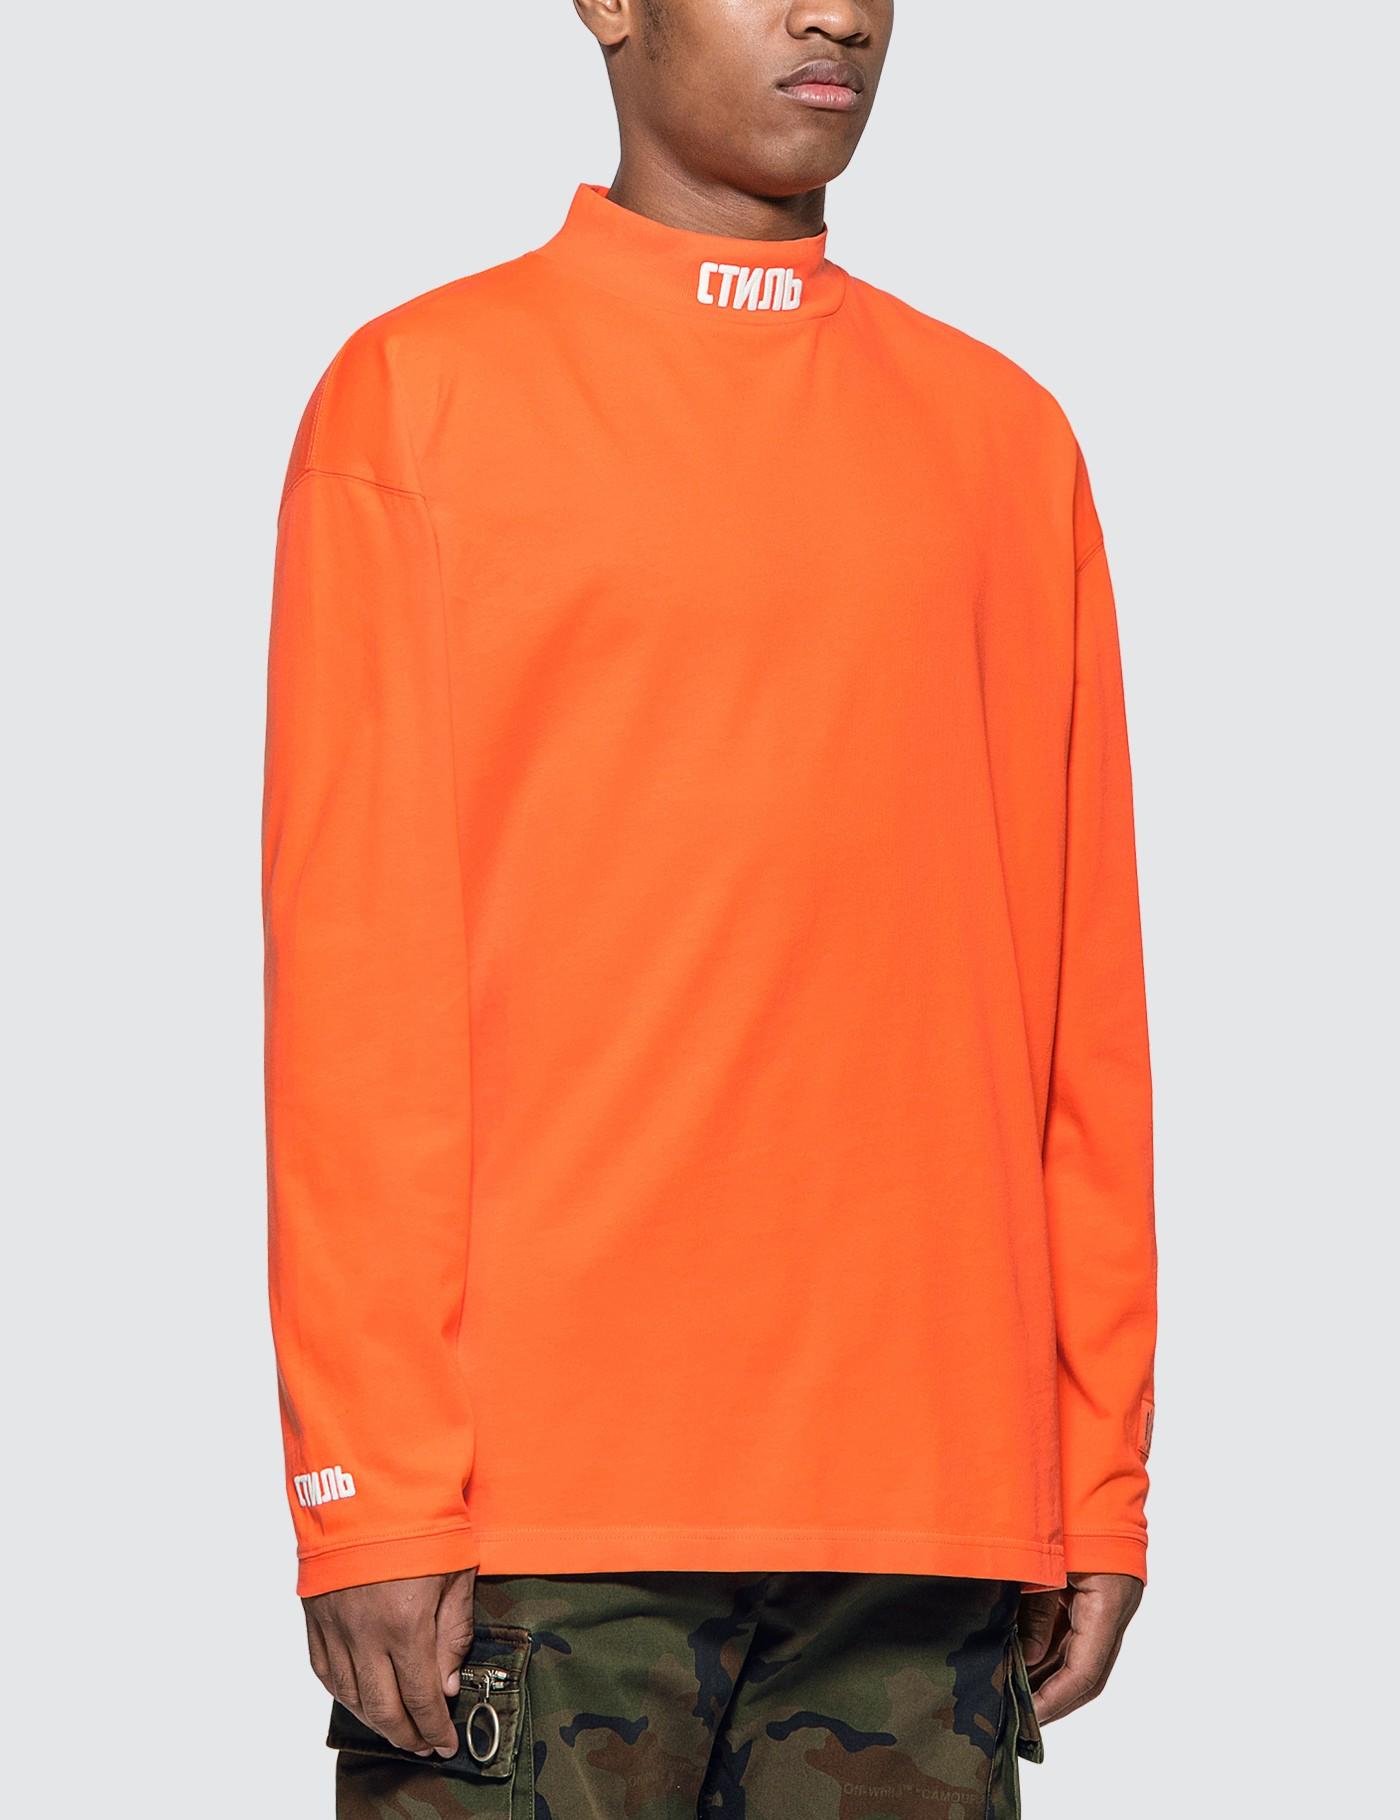 Heron Preston Cotton Ctnmb Long Sleeve T-shirt in Orange for Men - Lyst